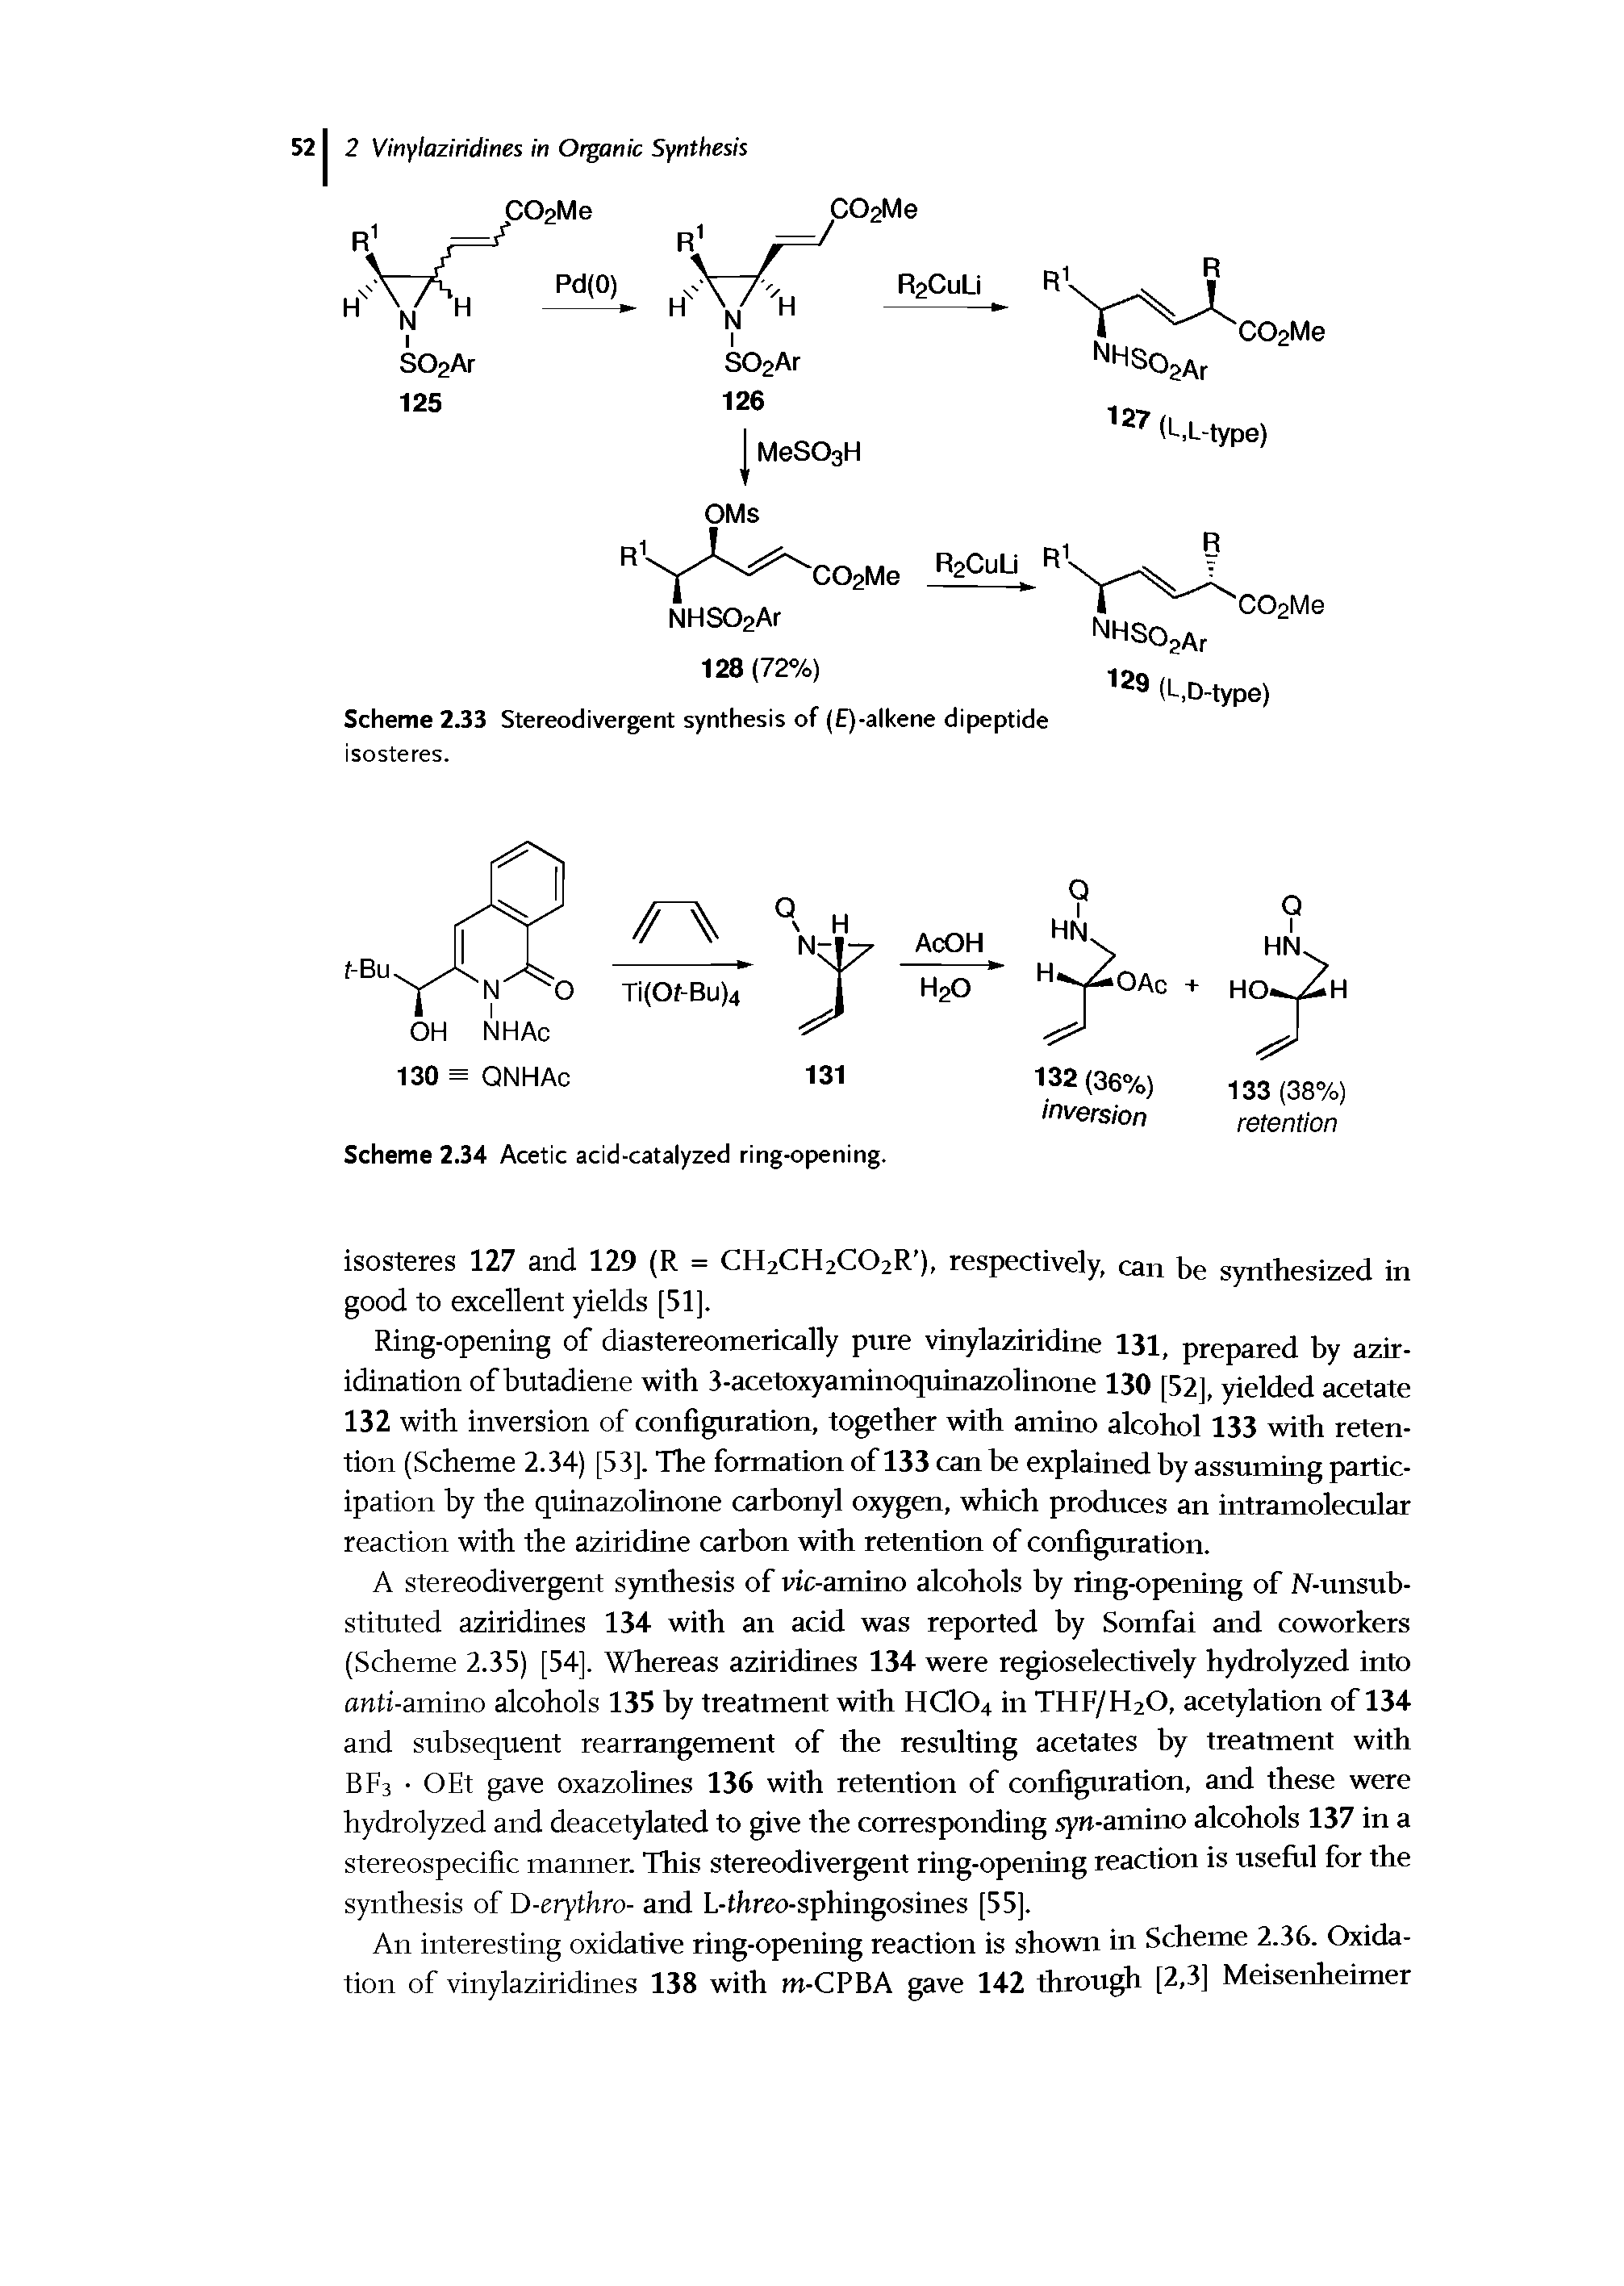 Scheme 2.34 Acetic acid-catalyzed ring-opening.